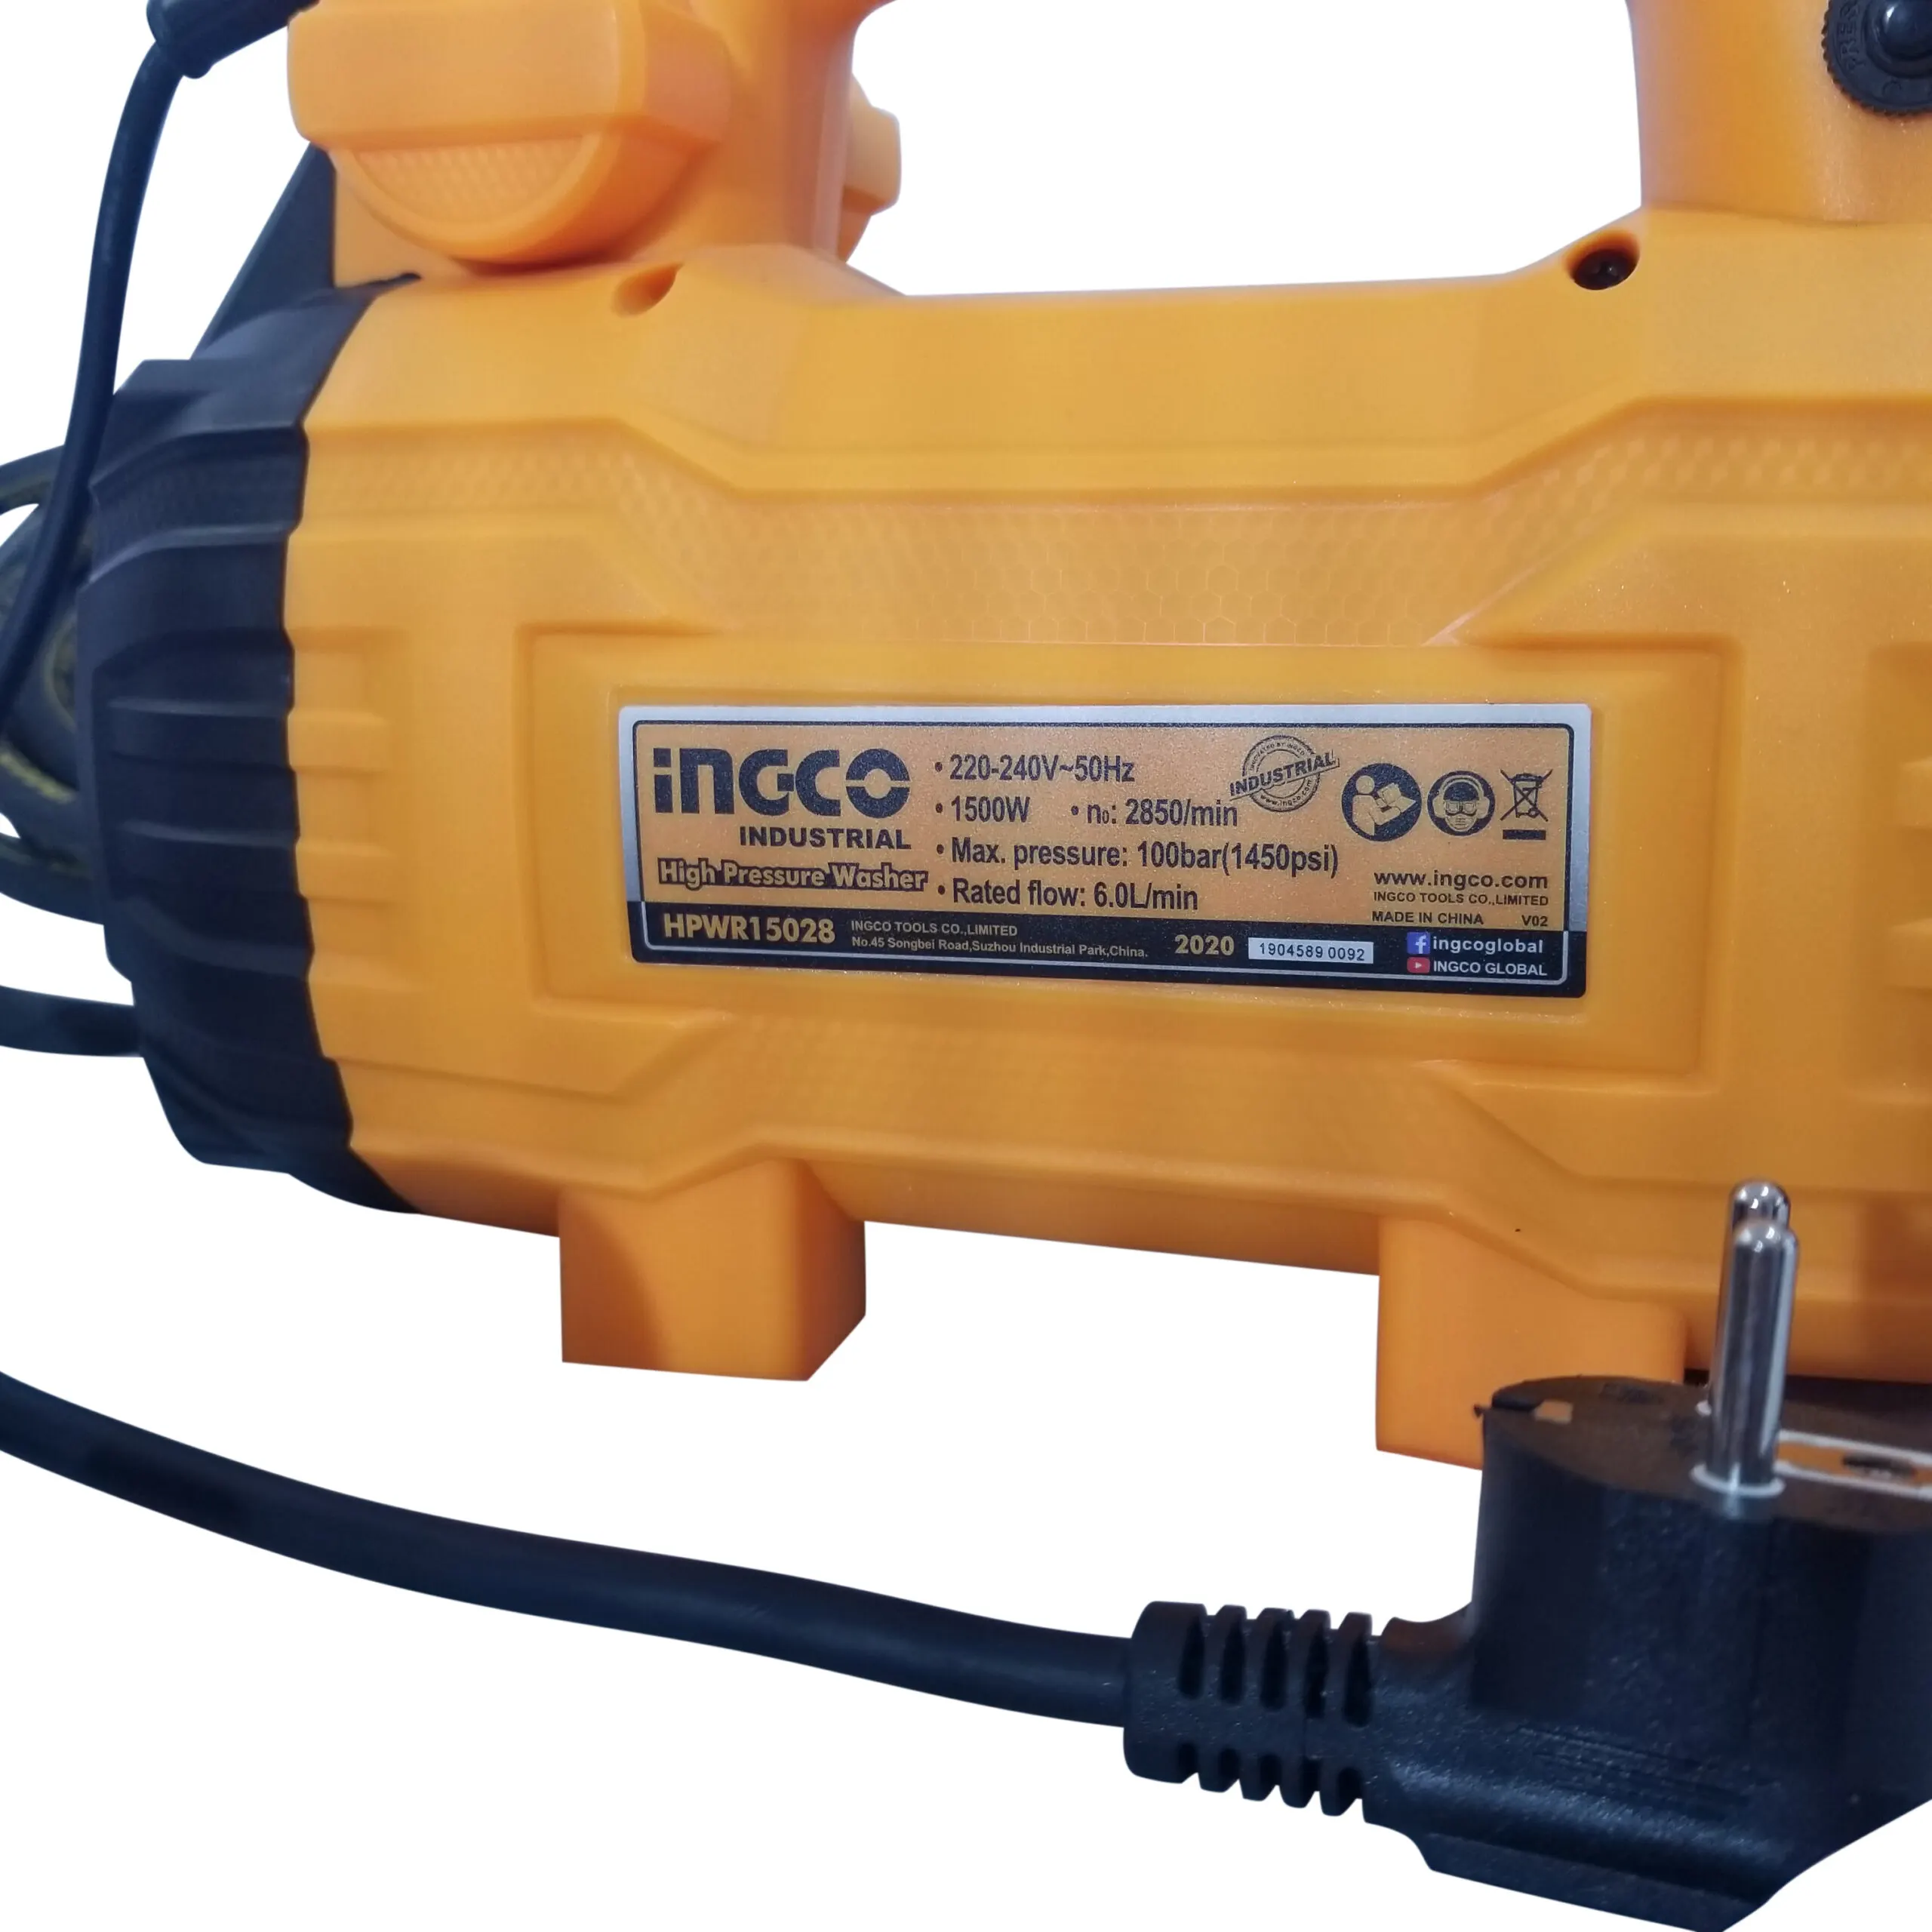 Ingco High Pressure Washer, 100 Bar, 1500 Watt, Yellow, HPWR15028